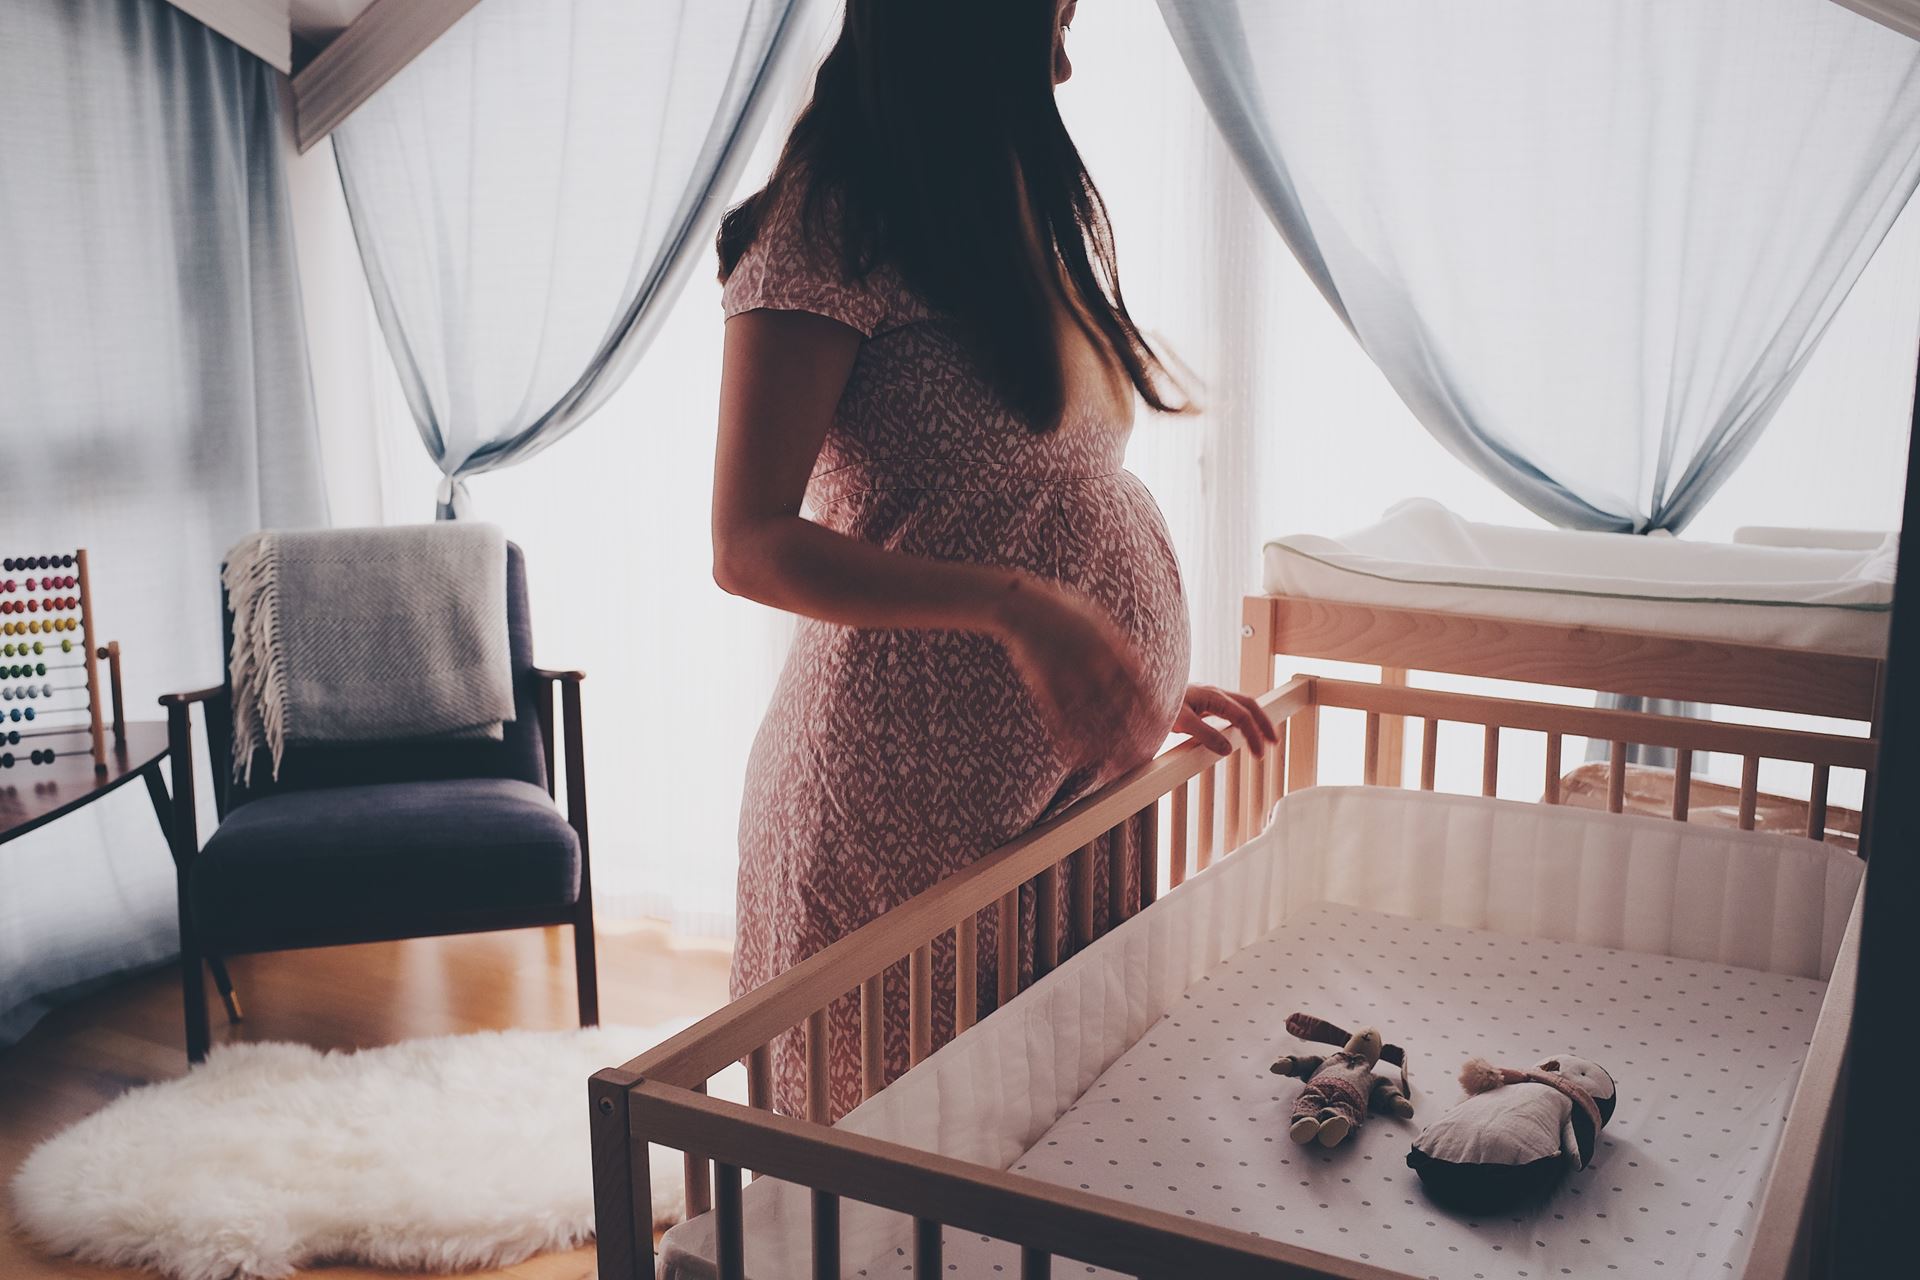 a pregnant woman stood by a crib